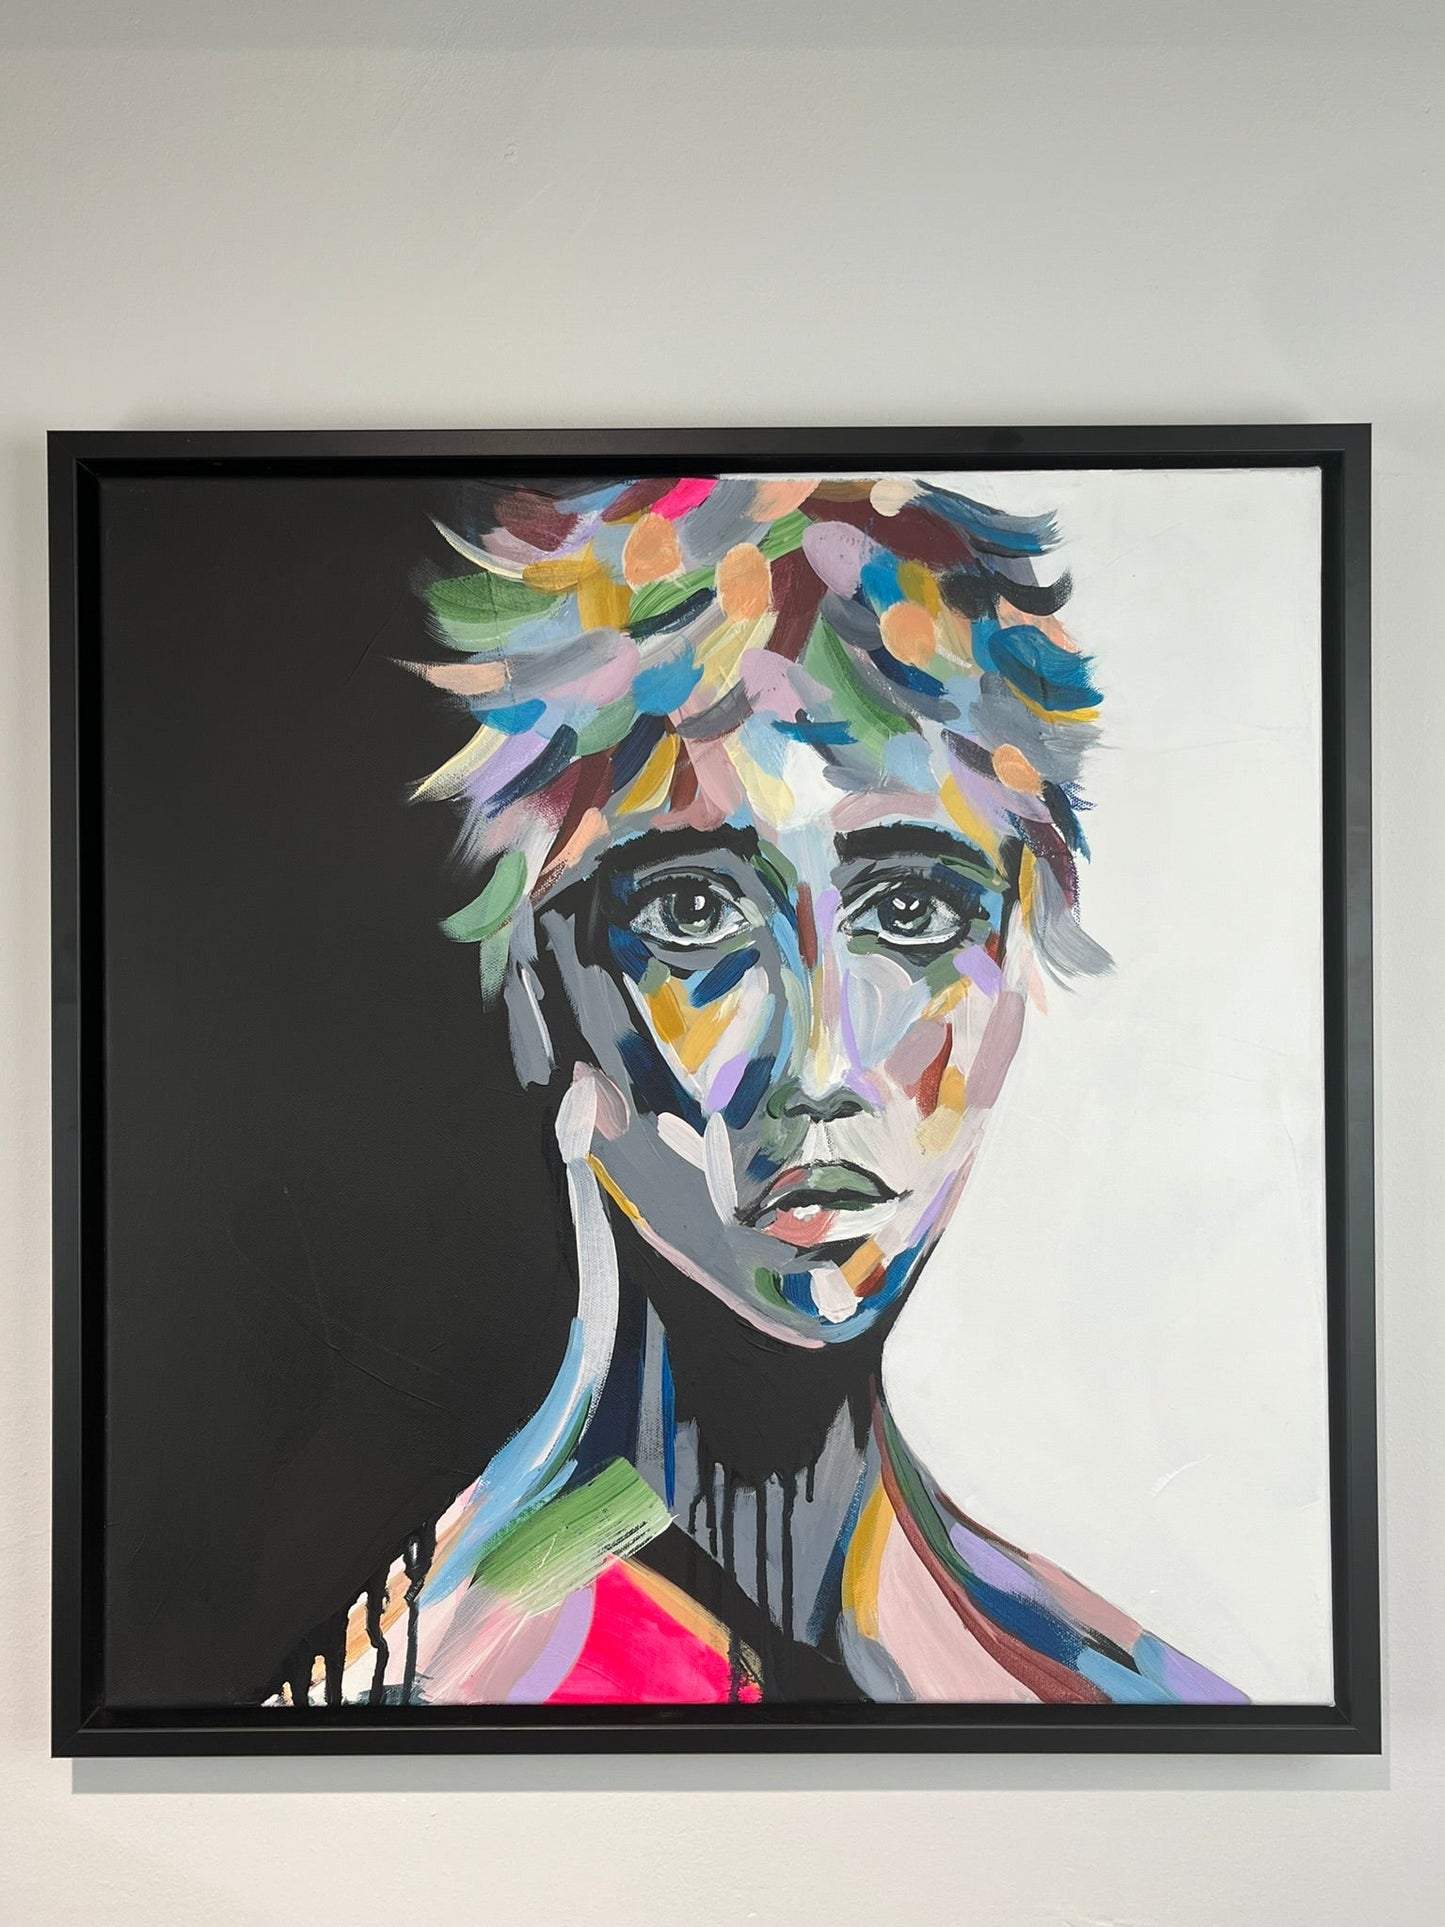 "Mixed face" as Fine art print